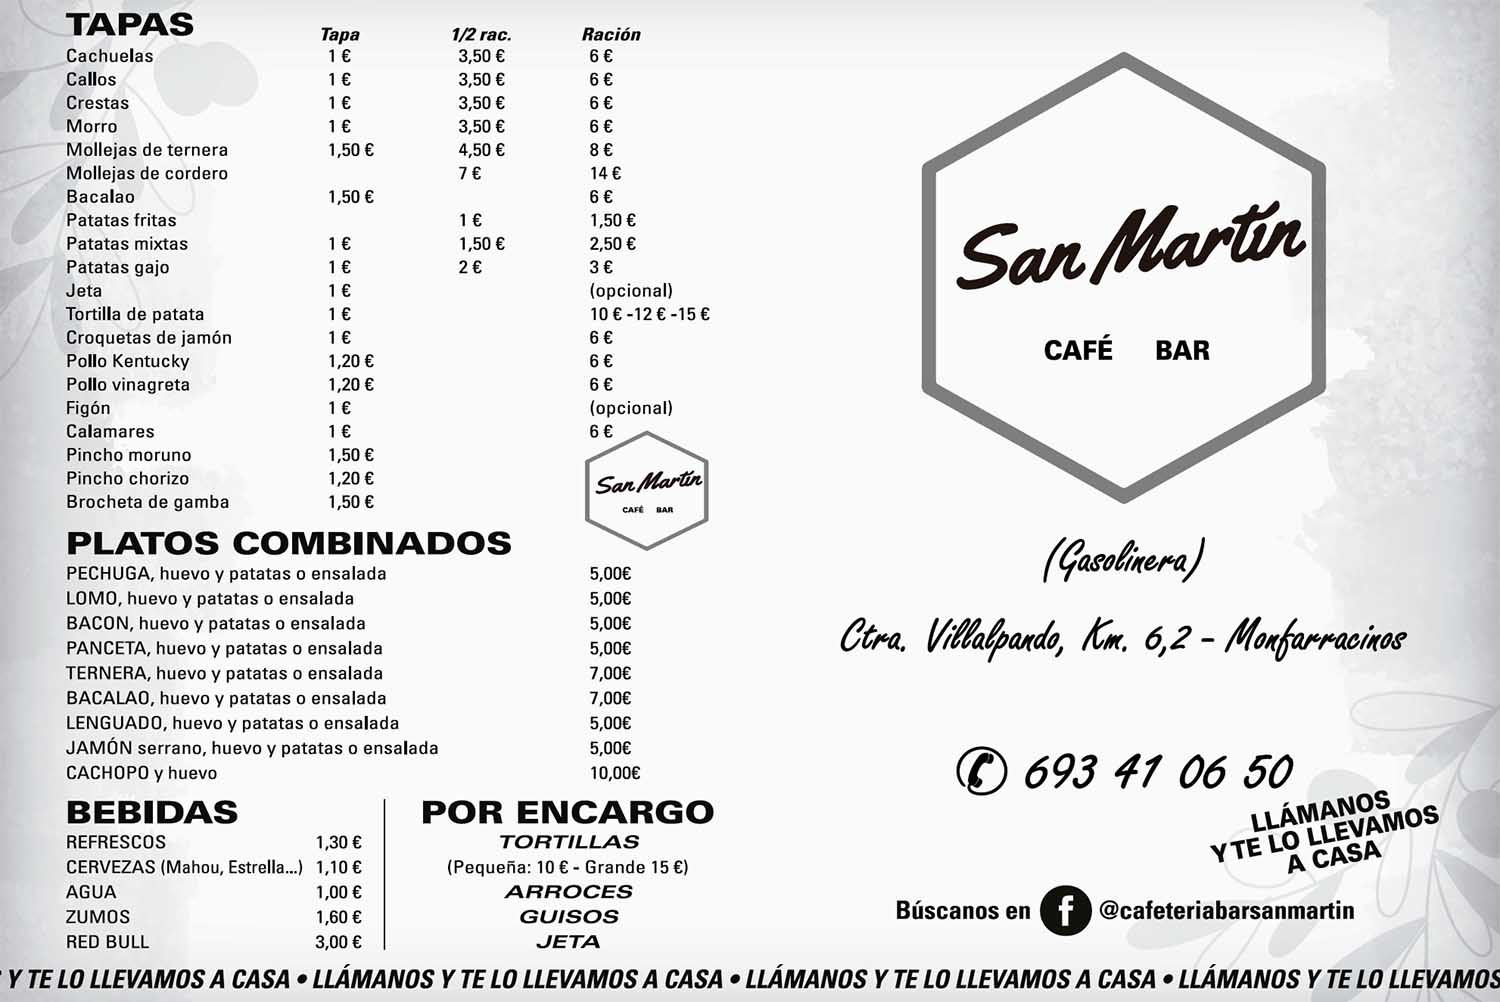 Café-Bar San Martín Monfarracinos. Zamora para llevar. Zamoraparallevar.es